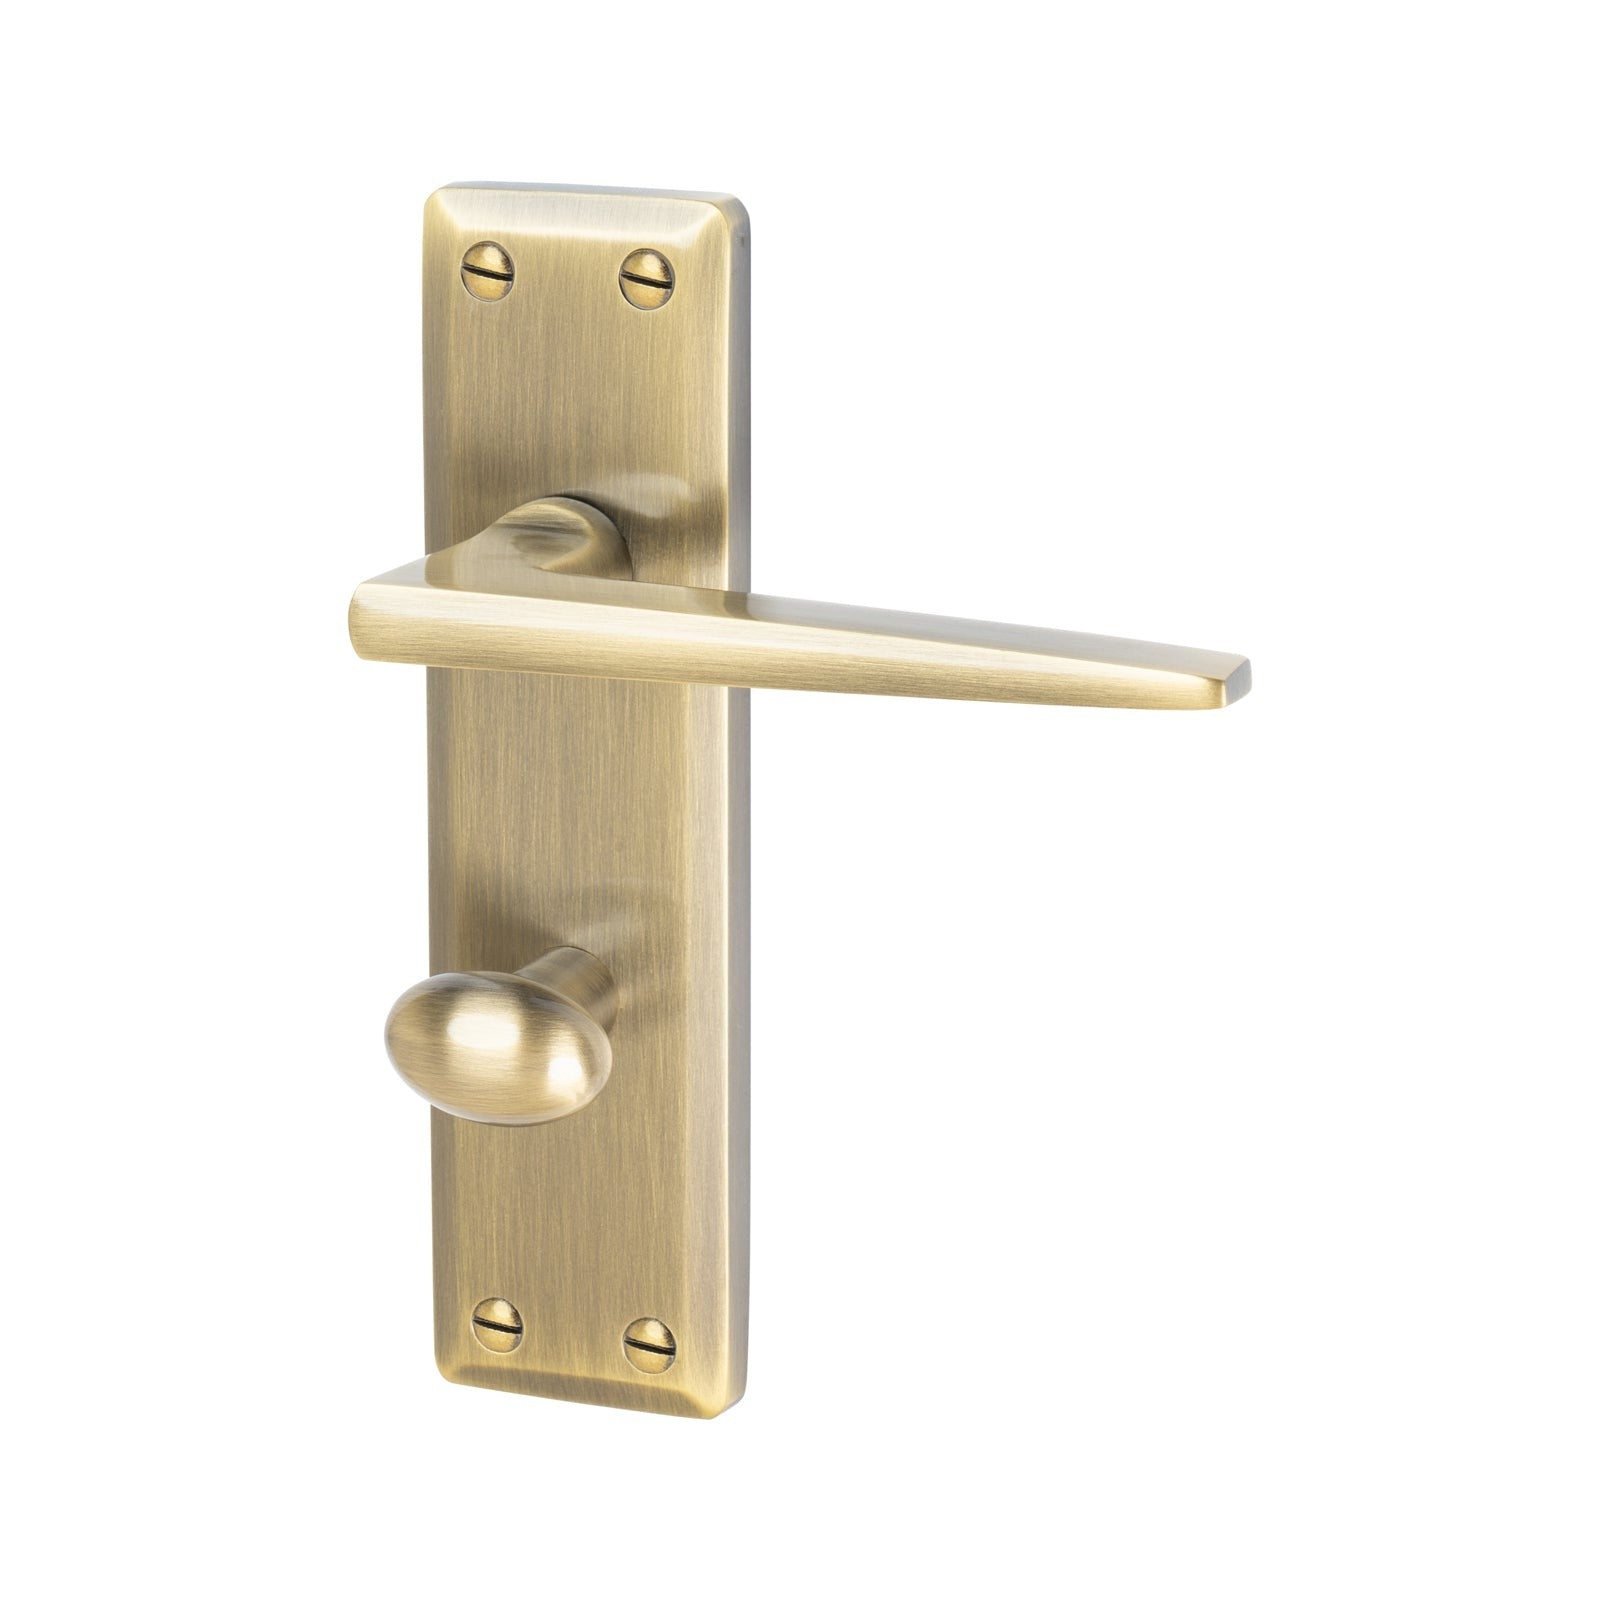 Kendal Door Handles On Plate Bathroom Handle in Aged Brass